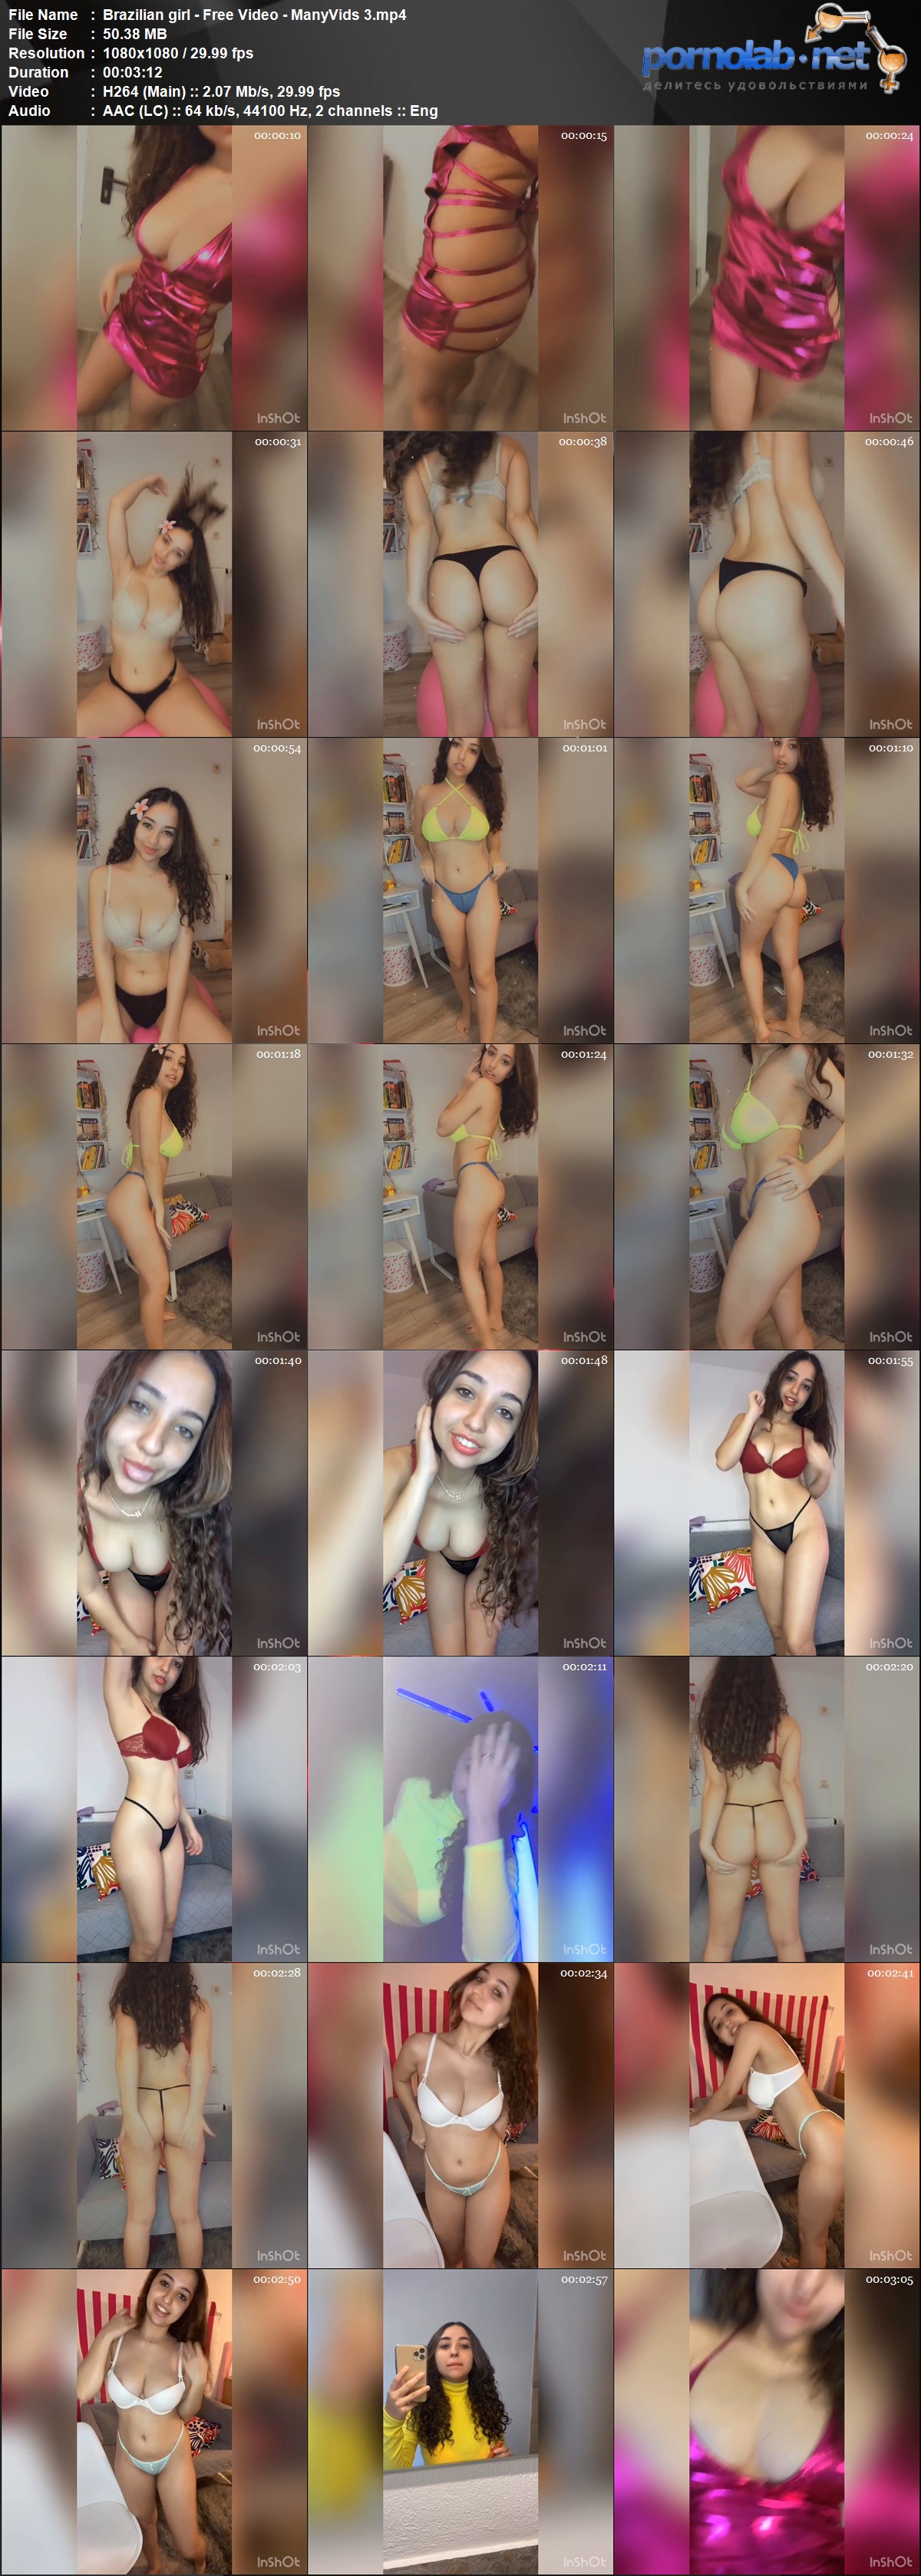 Brazilian girl Free Video Many Vids 3 mp 4